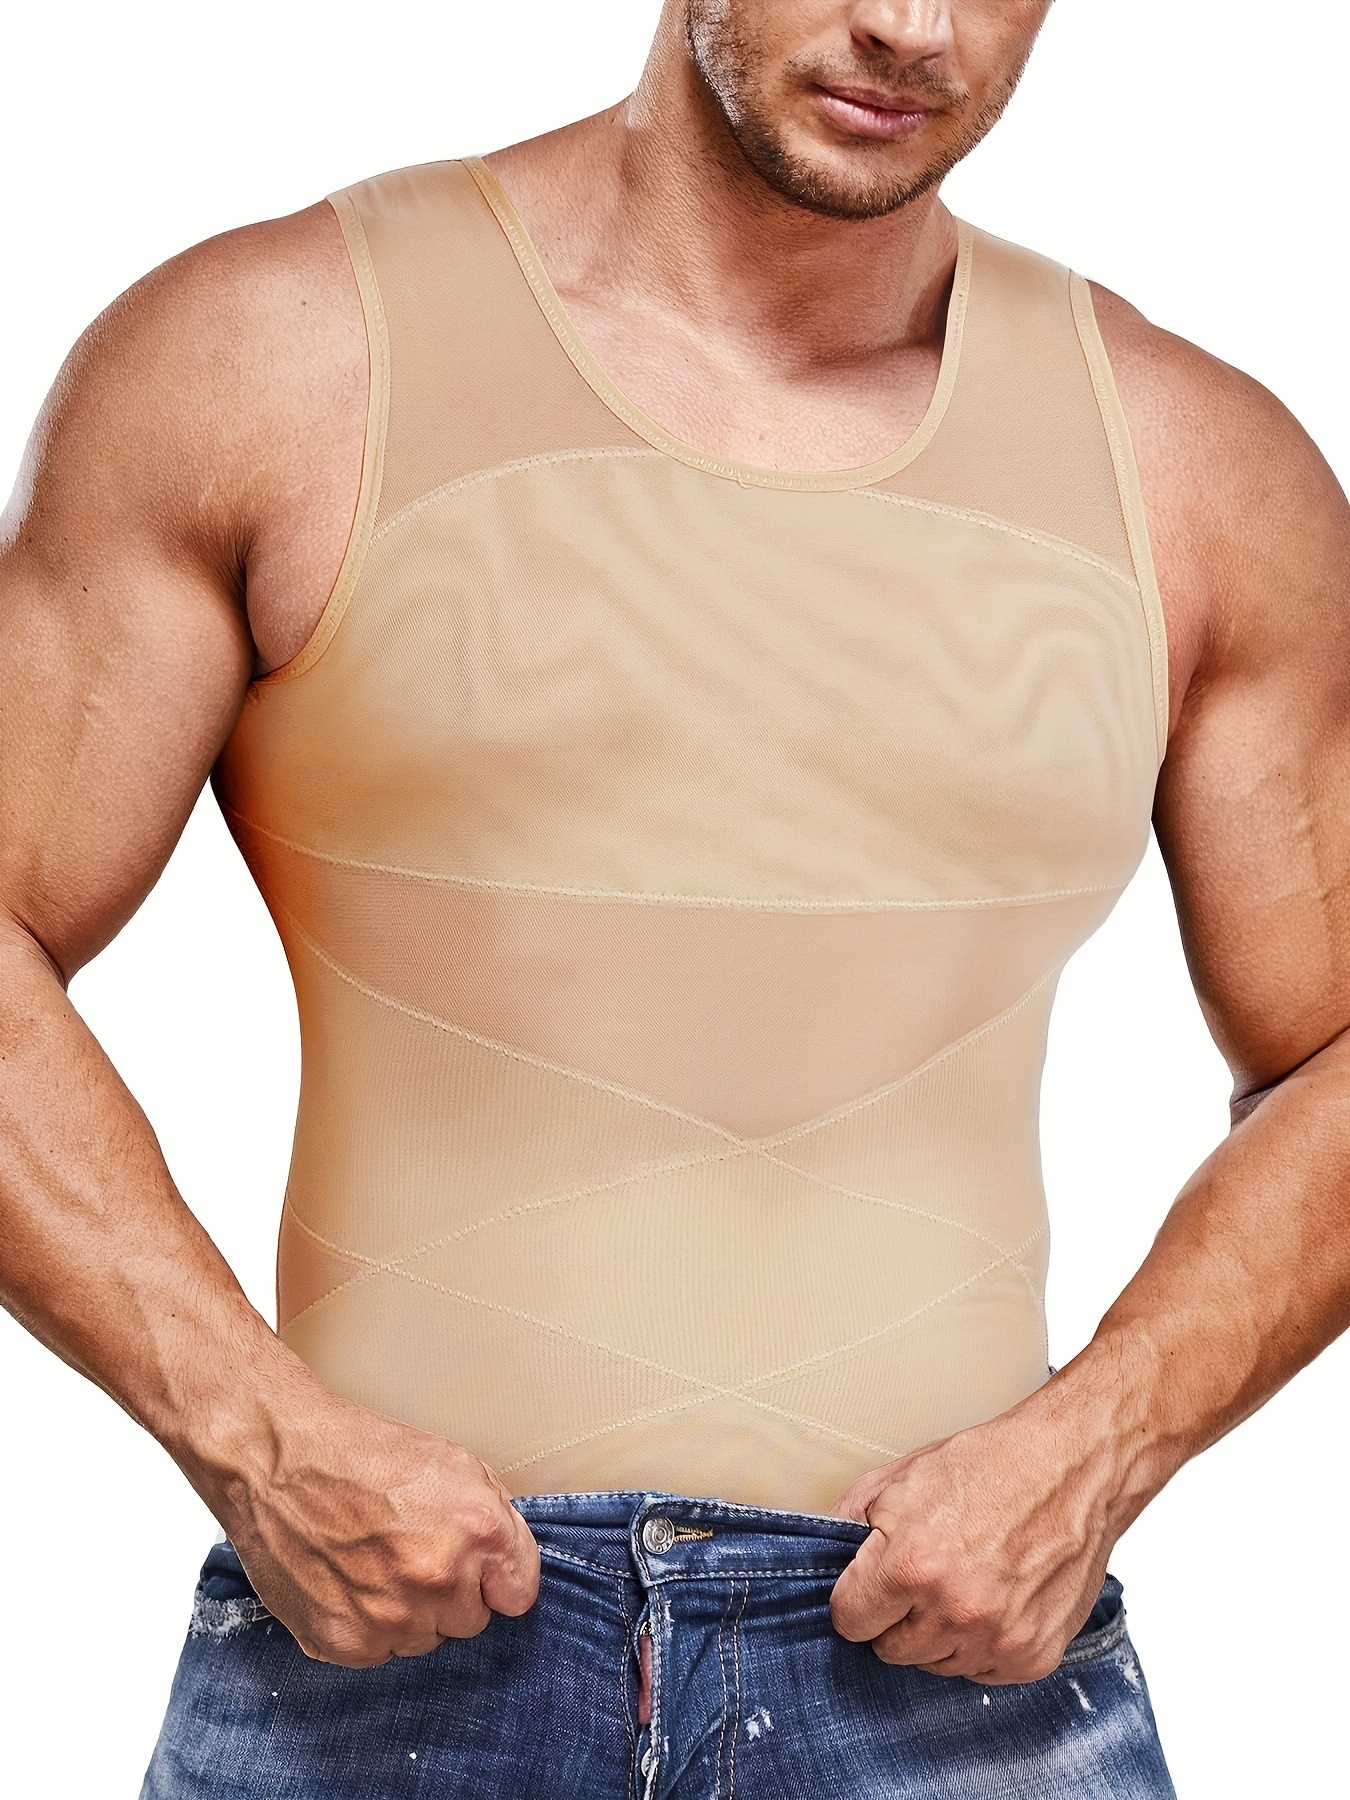 Aptoco 2 pcs Men Compression Shirt Slimming Body Shaper Vest Shirt Tummy  Control Shapewear Abdomen Slim Undershirt, Black+White, Christmas Gifts 